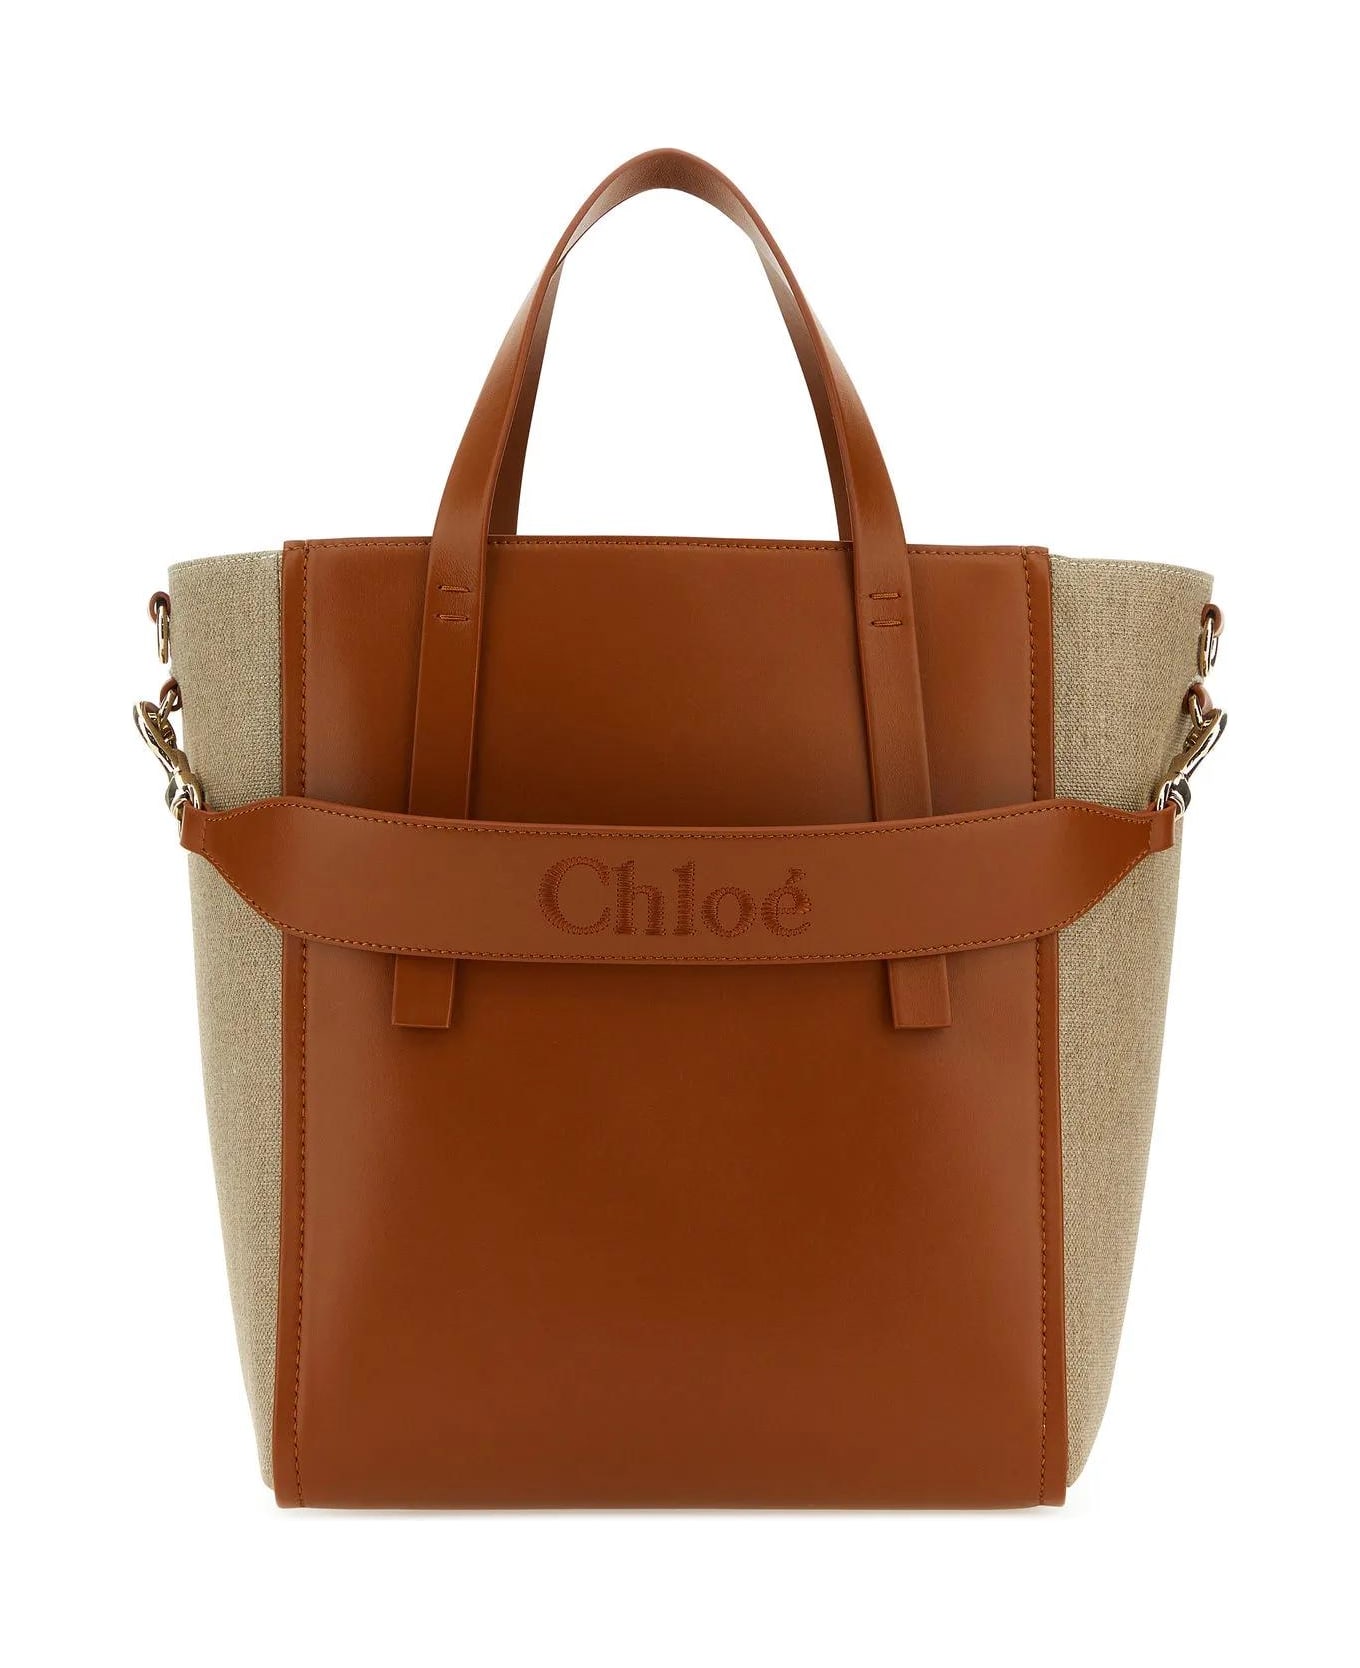 Chloé Sense Shopping Bag - CARAMEL